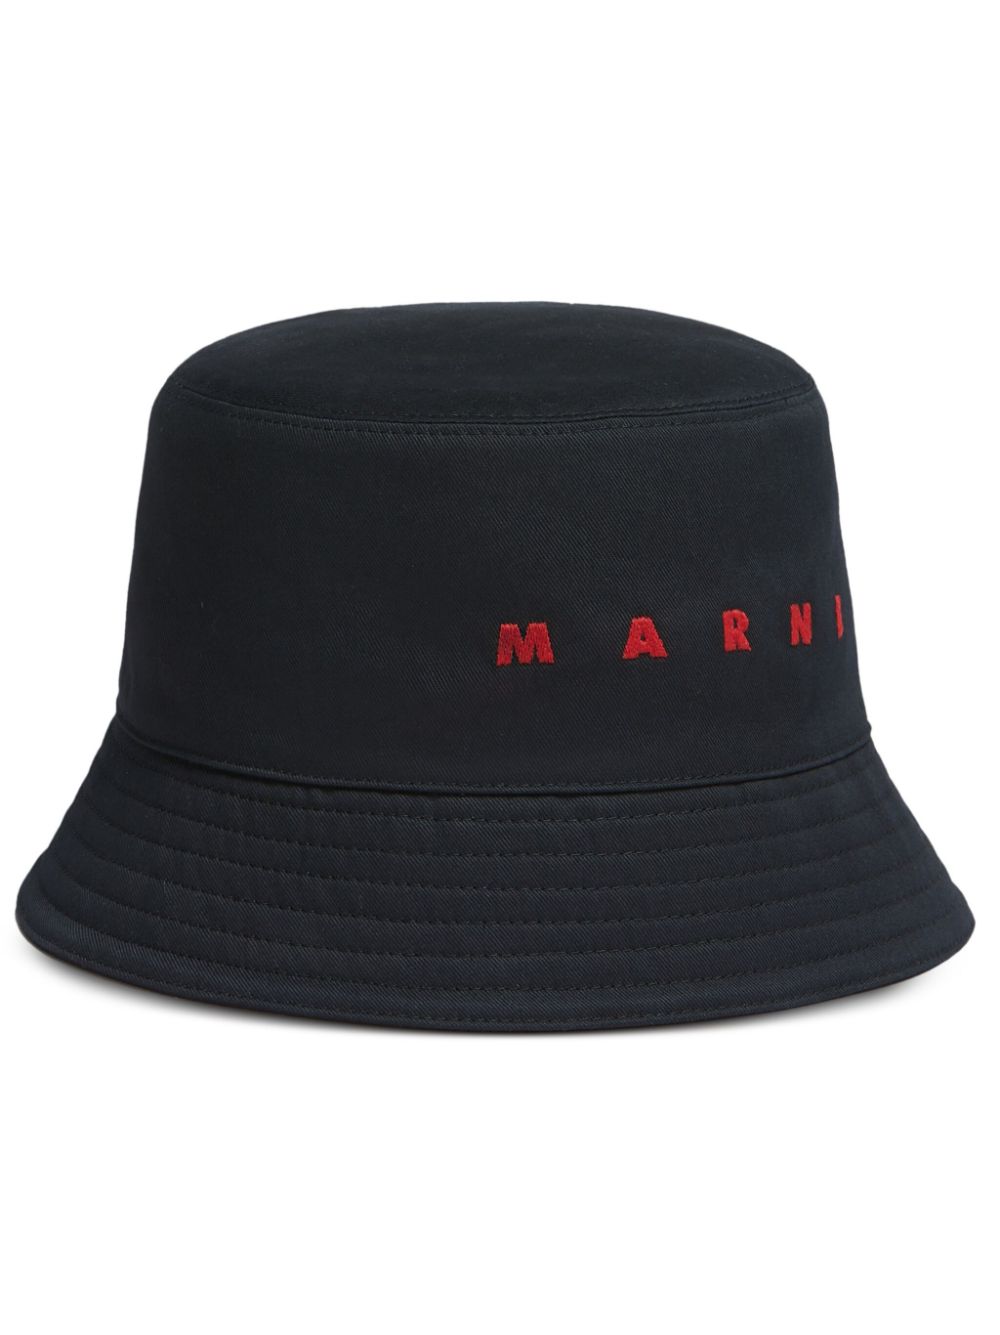 Image 1 of Marni logo-embroidered bucket hat